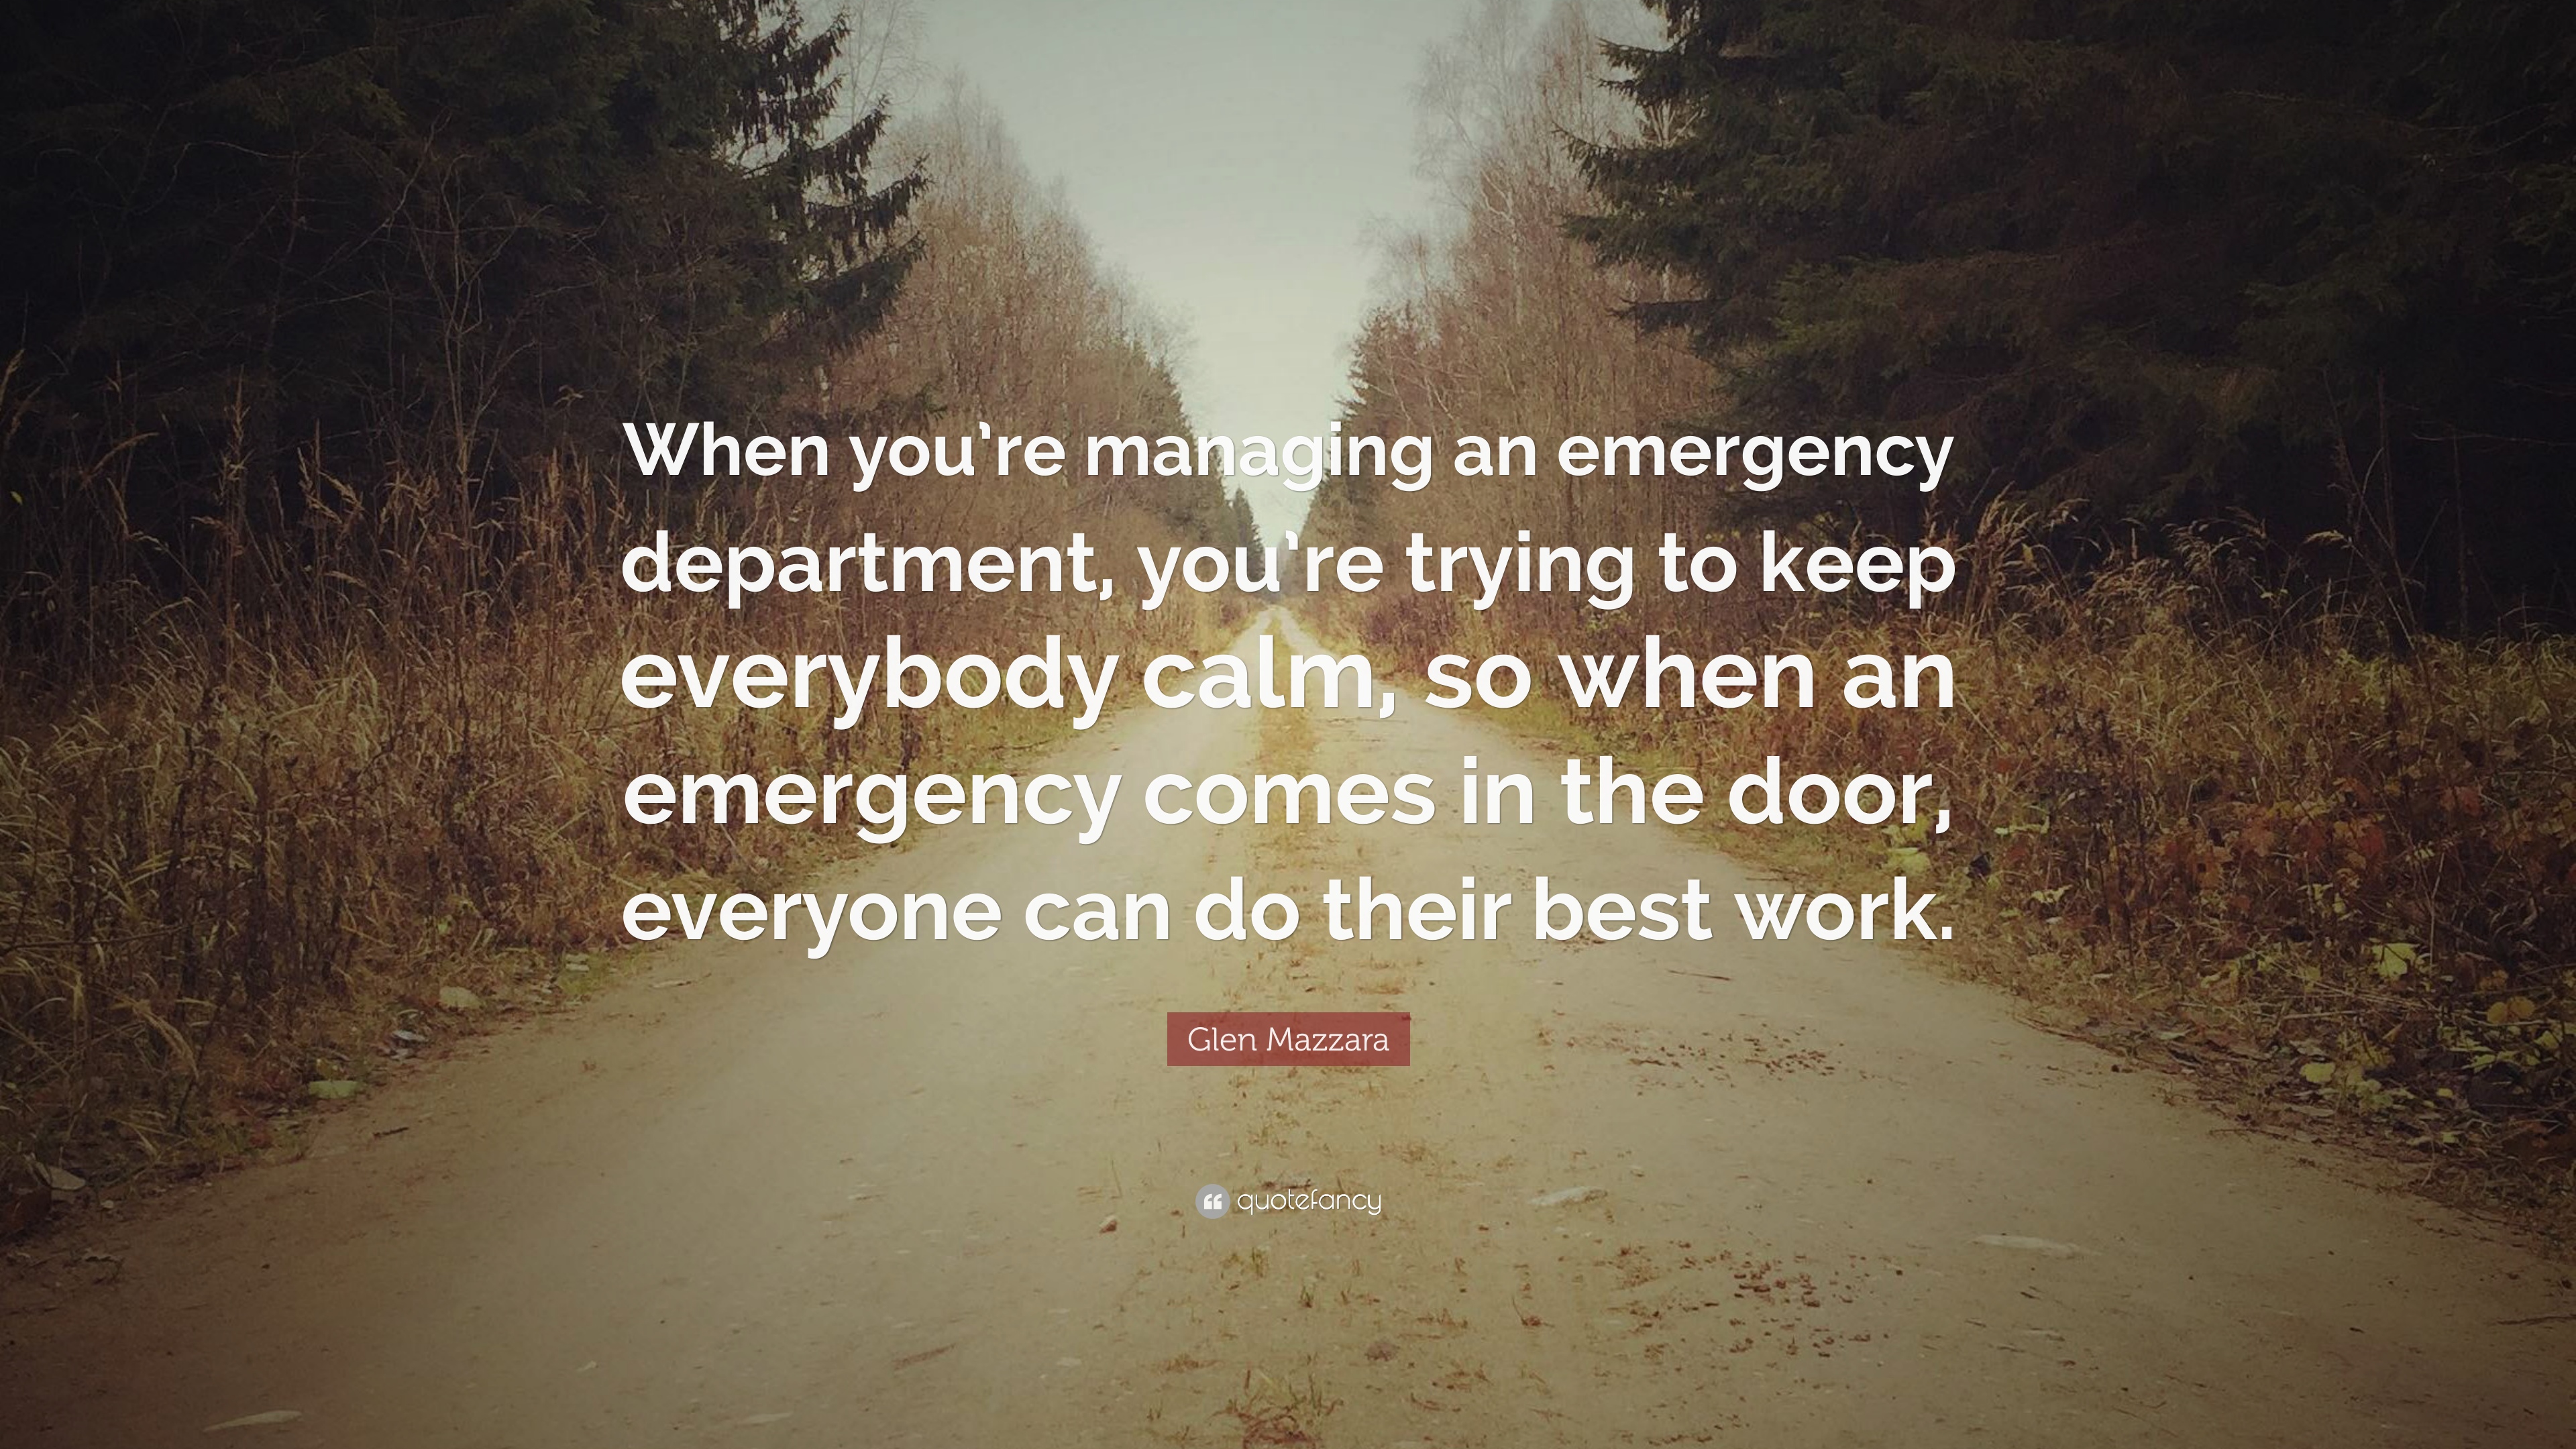 Glen Mazzara Quote: “When you're managing an emergency department